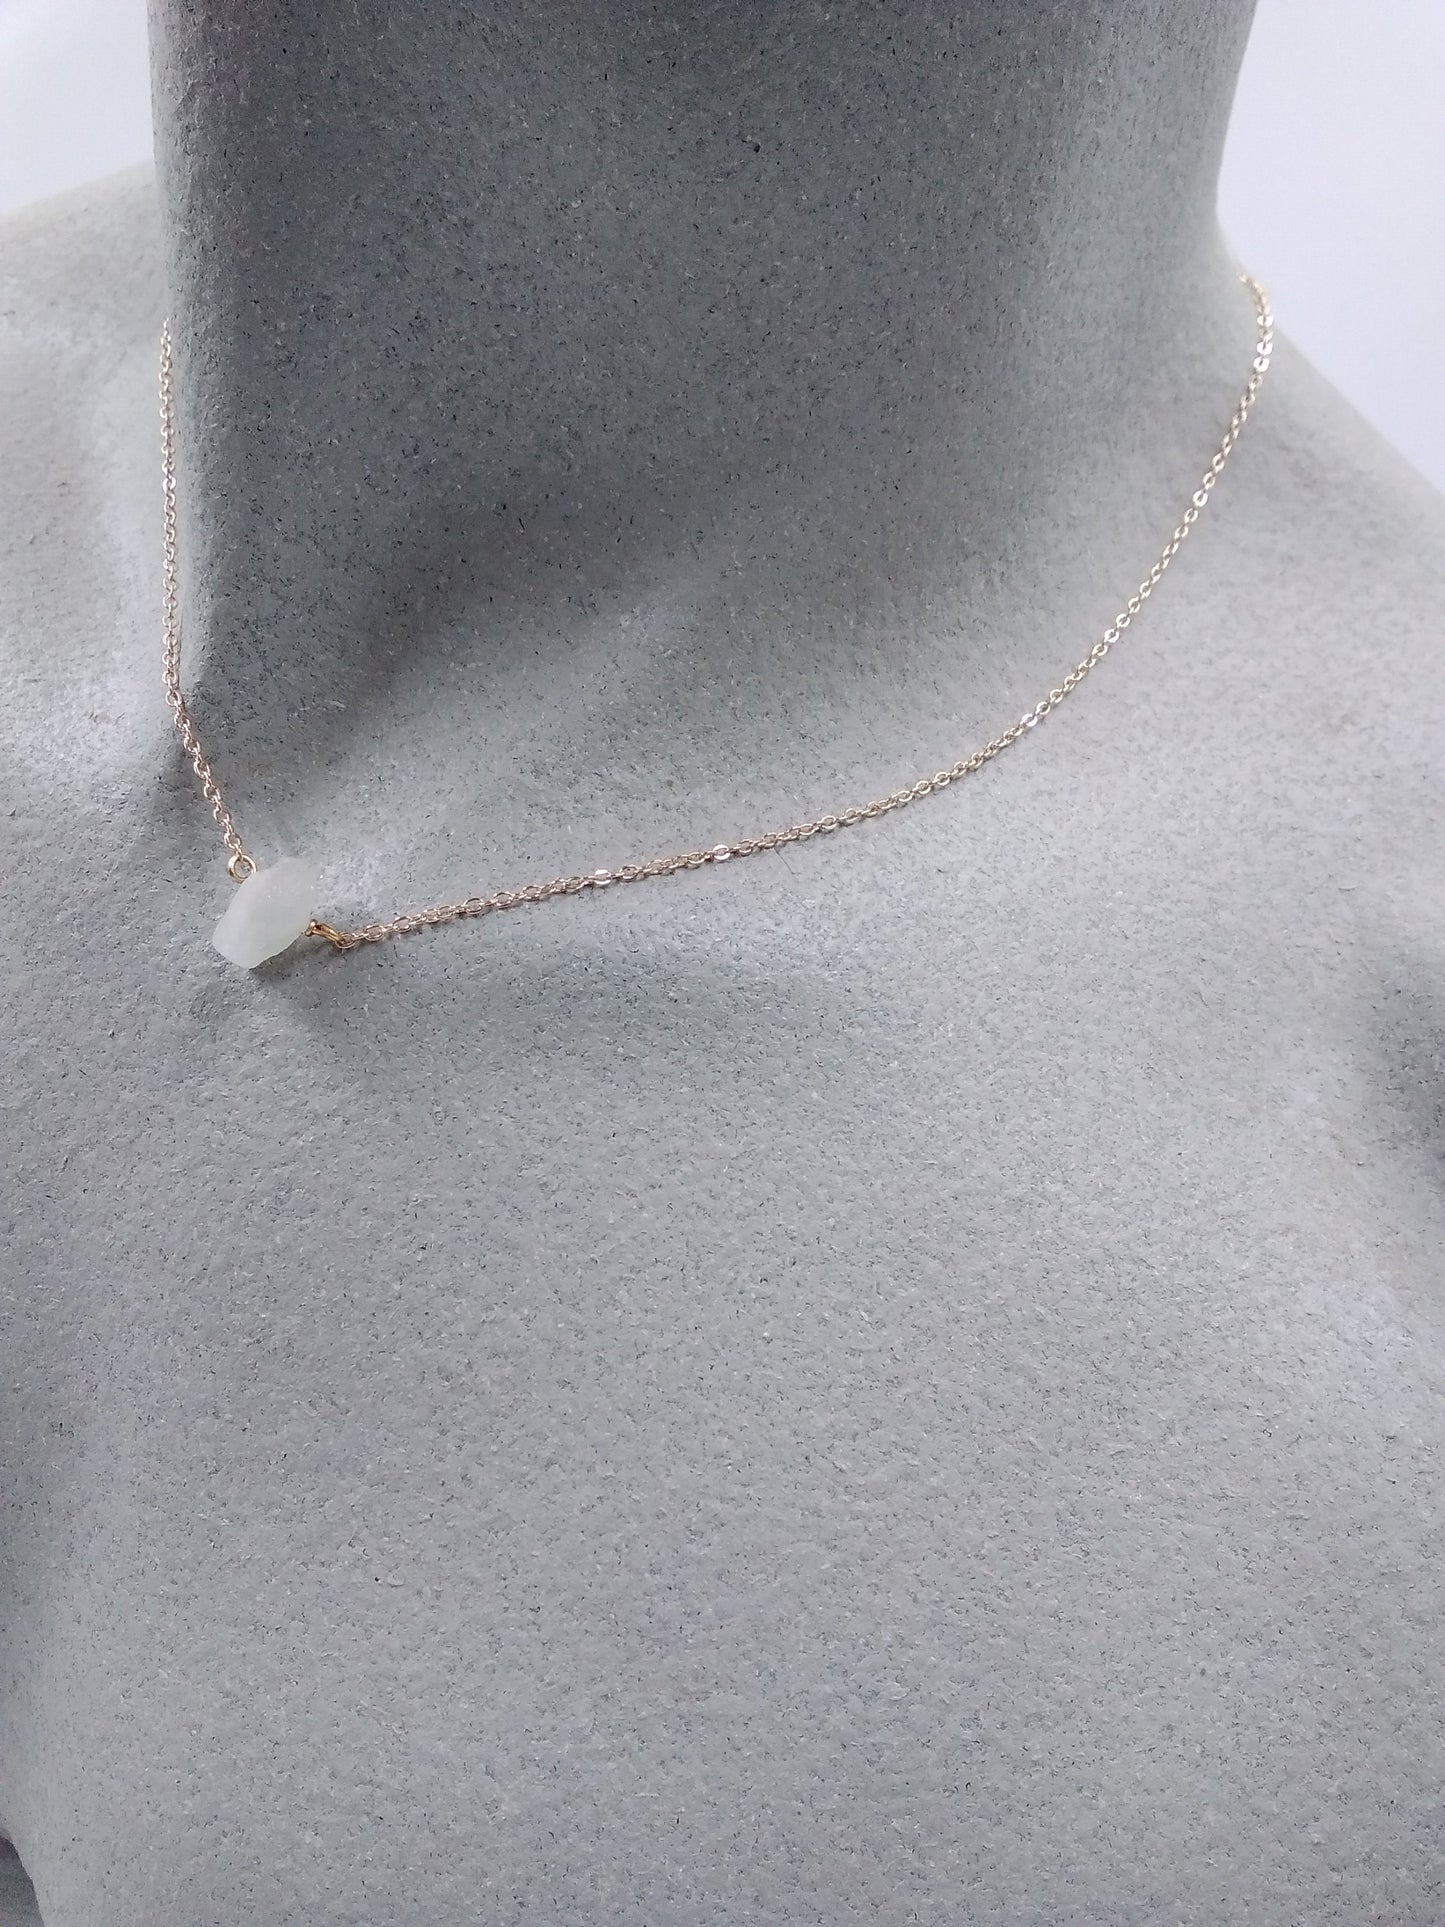 March Birthstone: Aquamarine Necklace